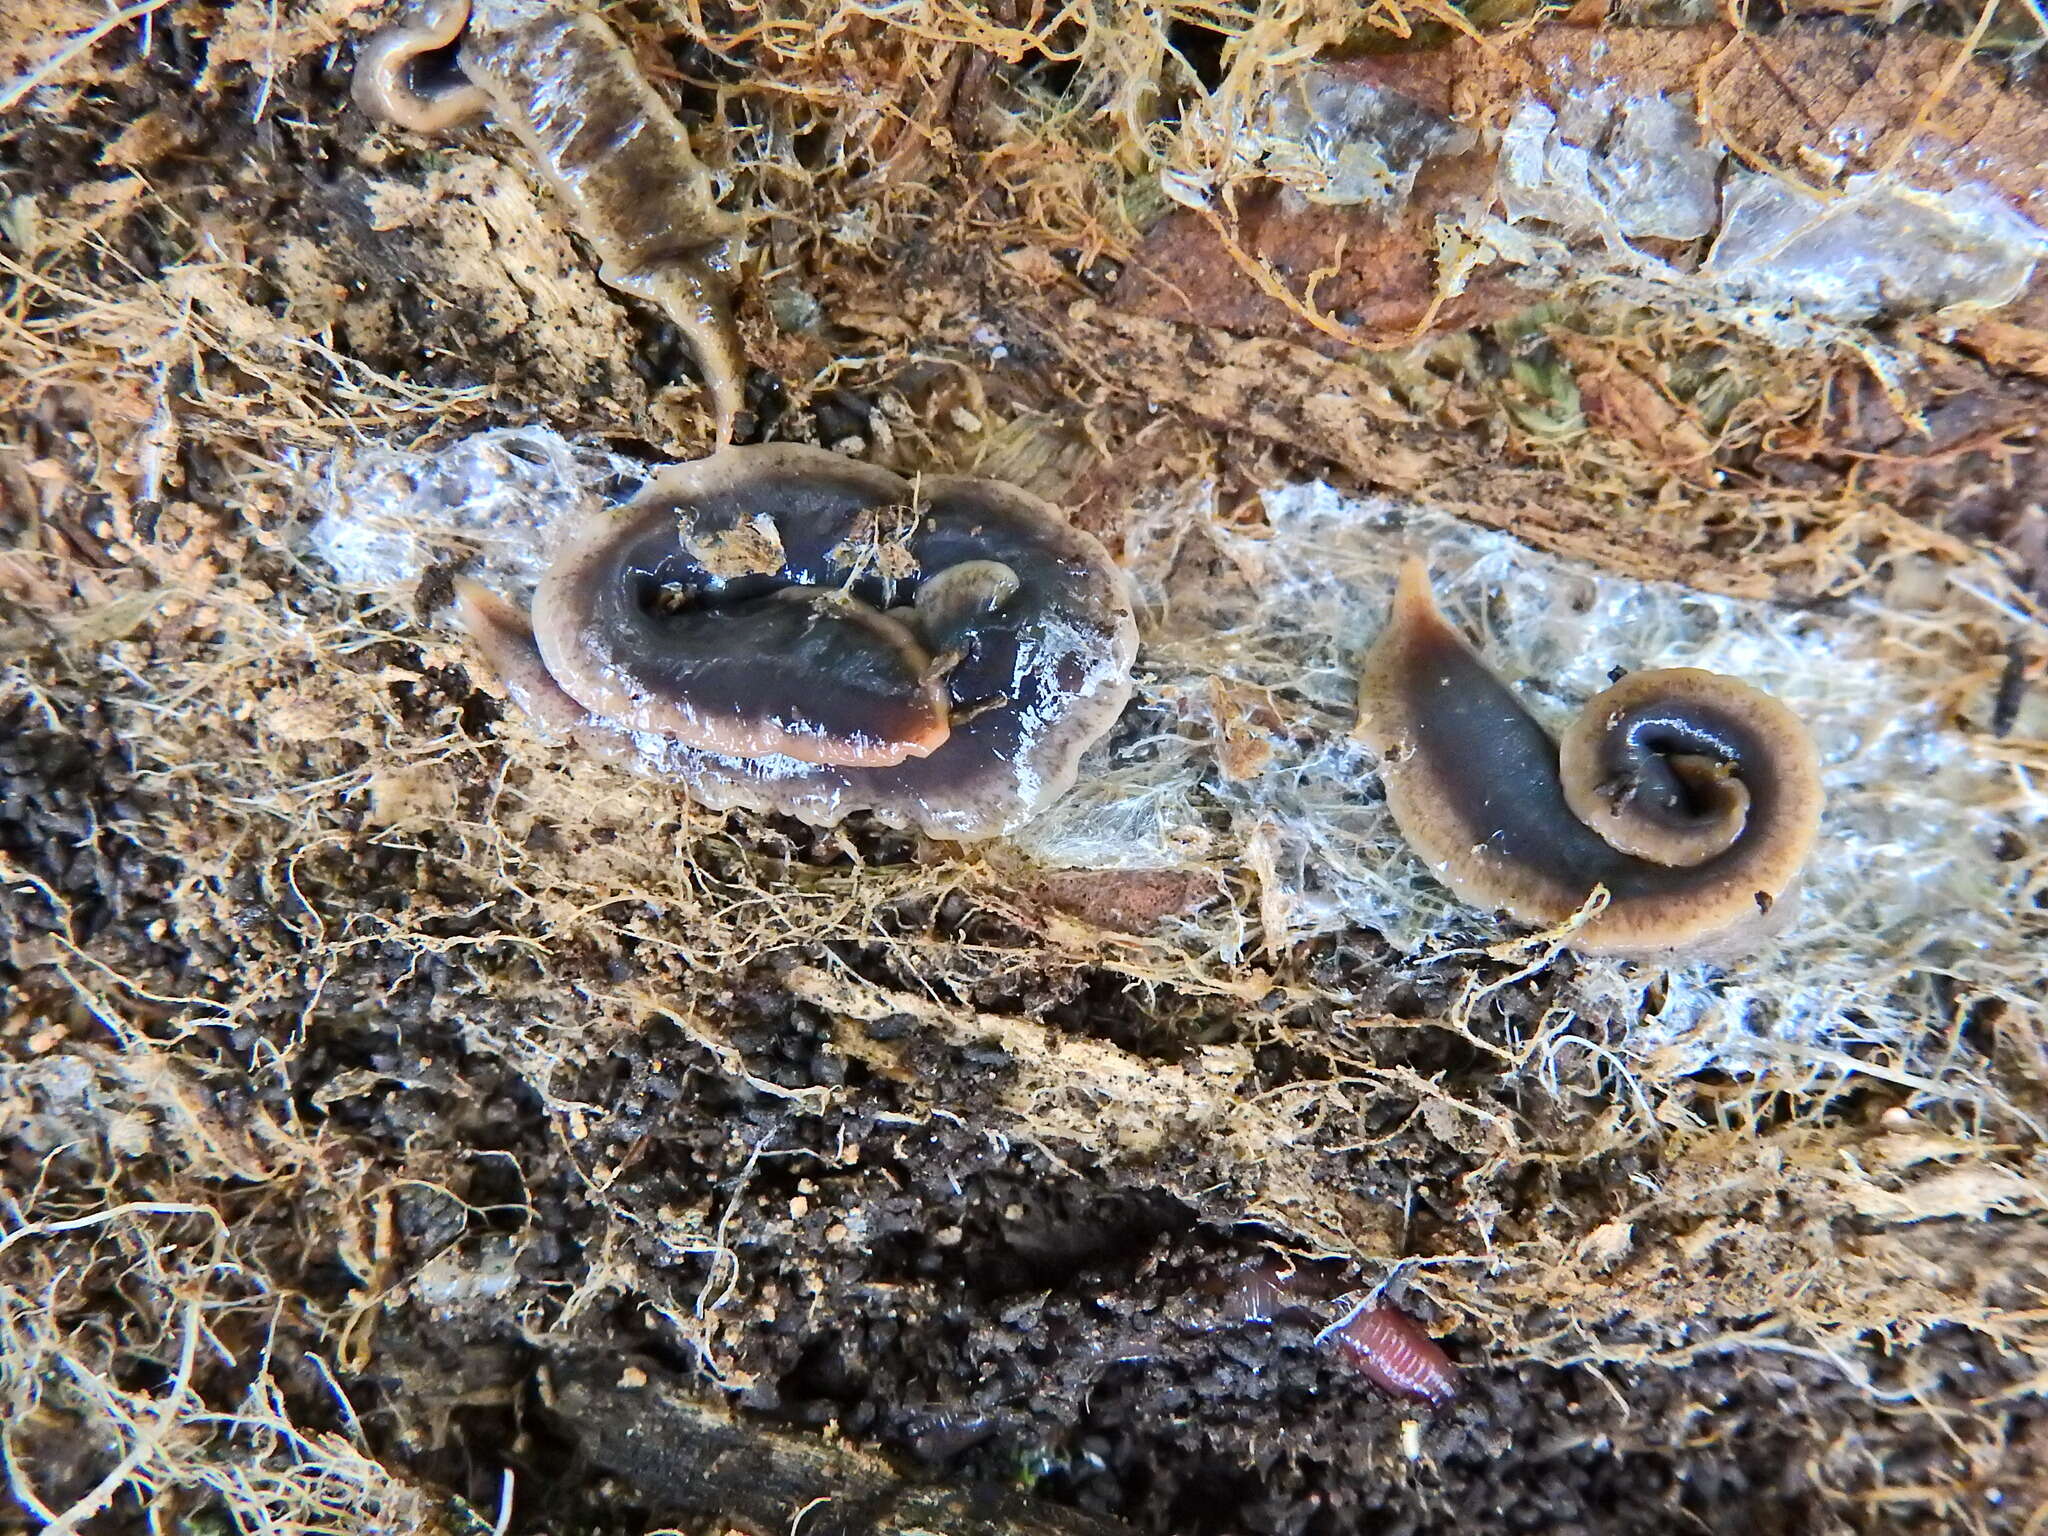 Image of New Zealand flatworm